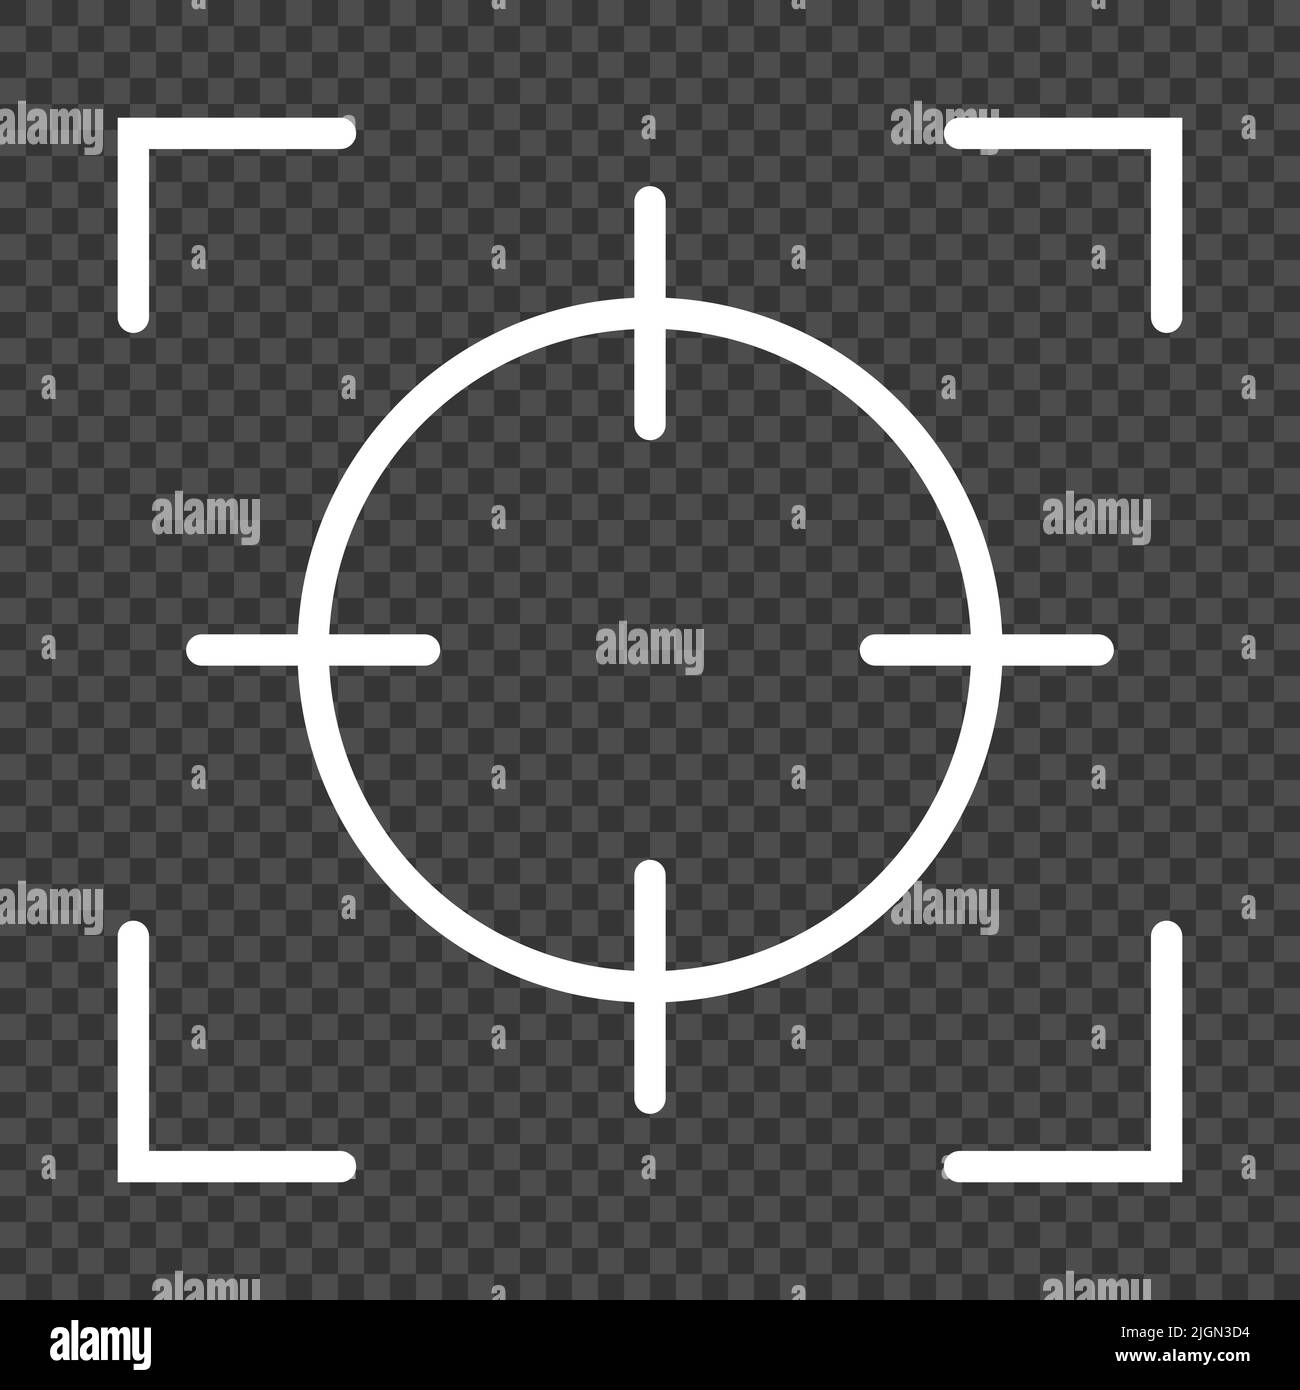 Objektiv-Vektorsymbol für Kamerafokus isoliert. Fokuslinie der Kamera Stock Vektor